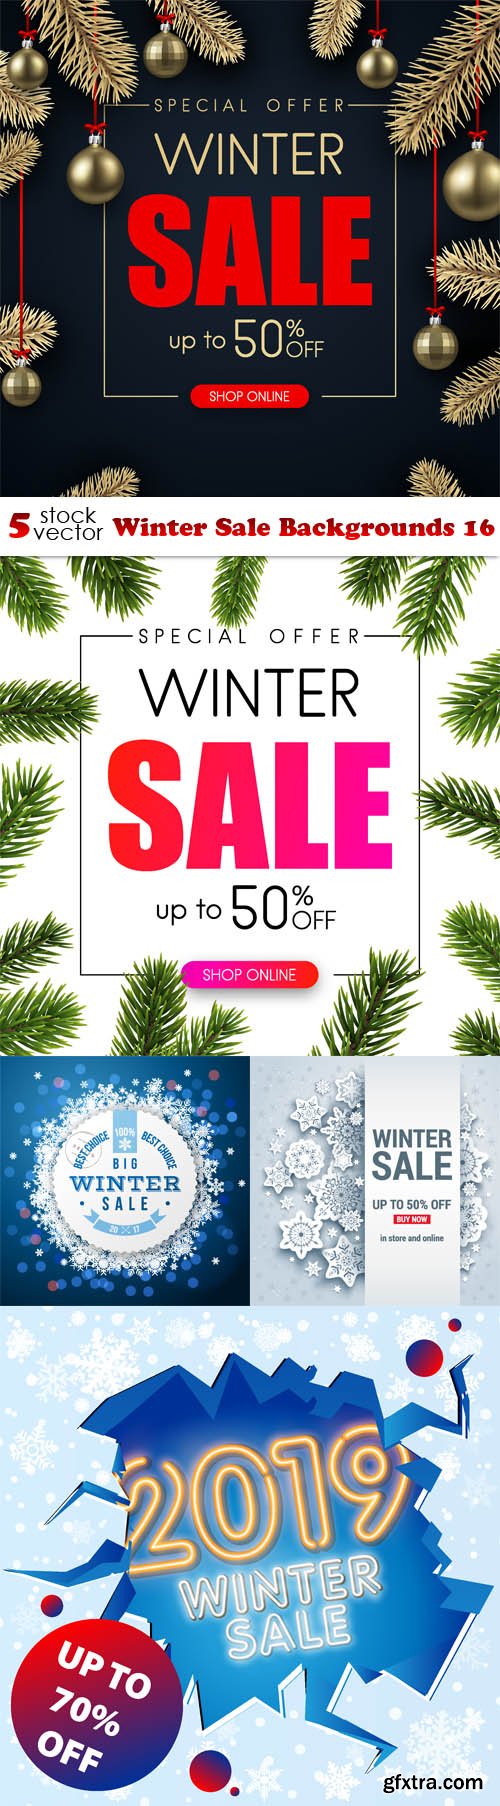 Vectors - Winter Sale Backgrounds 16